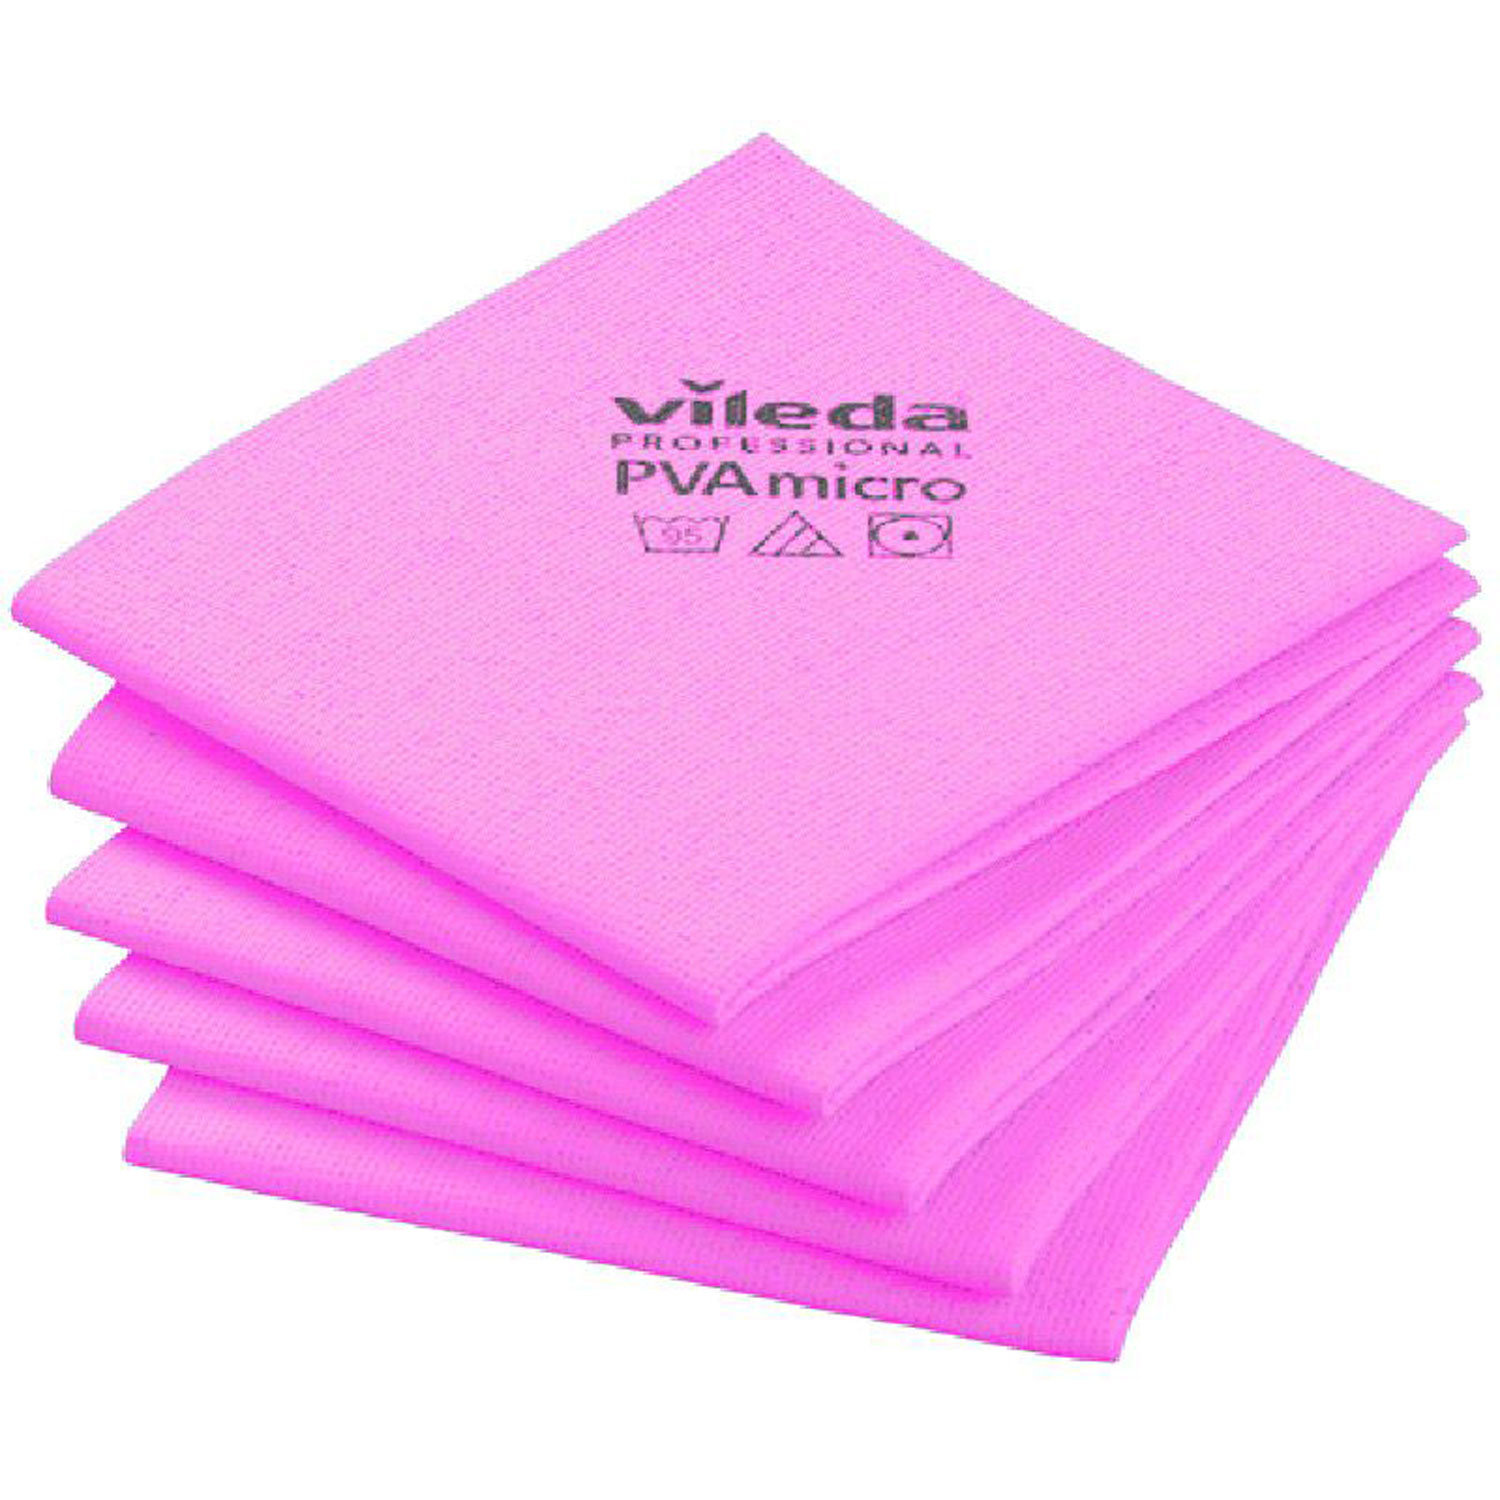 Vileda PVA Micro Cloths - Microfibre Cloths